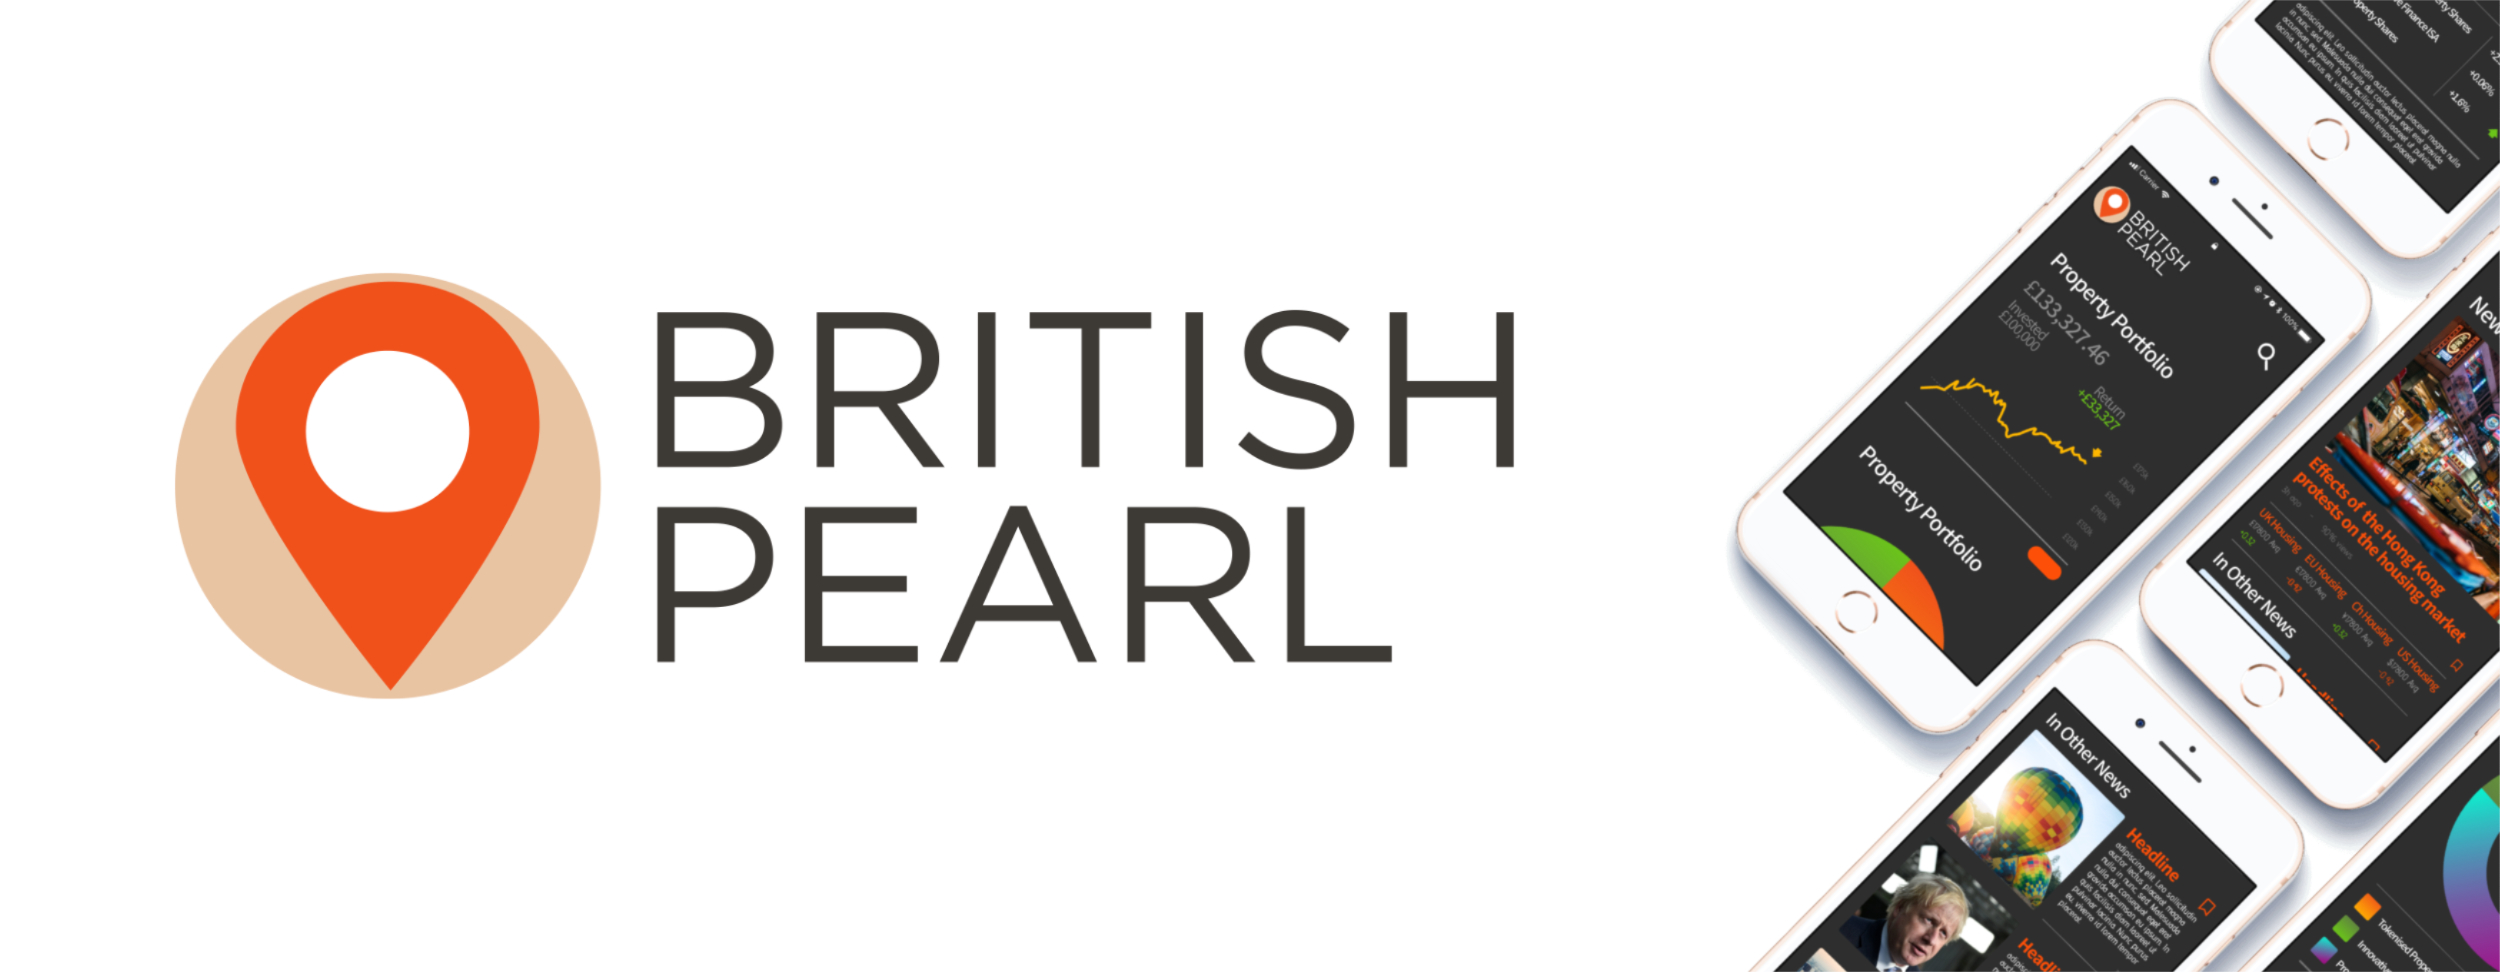 British_Pearl_Banner